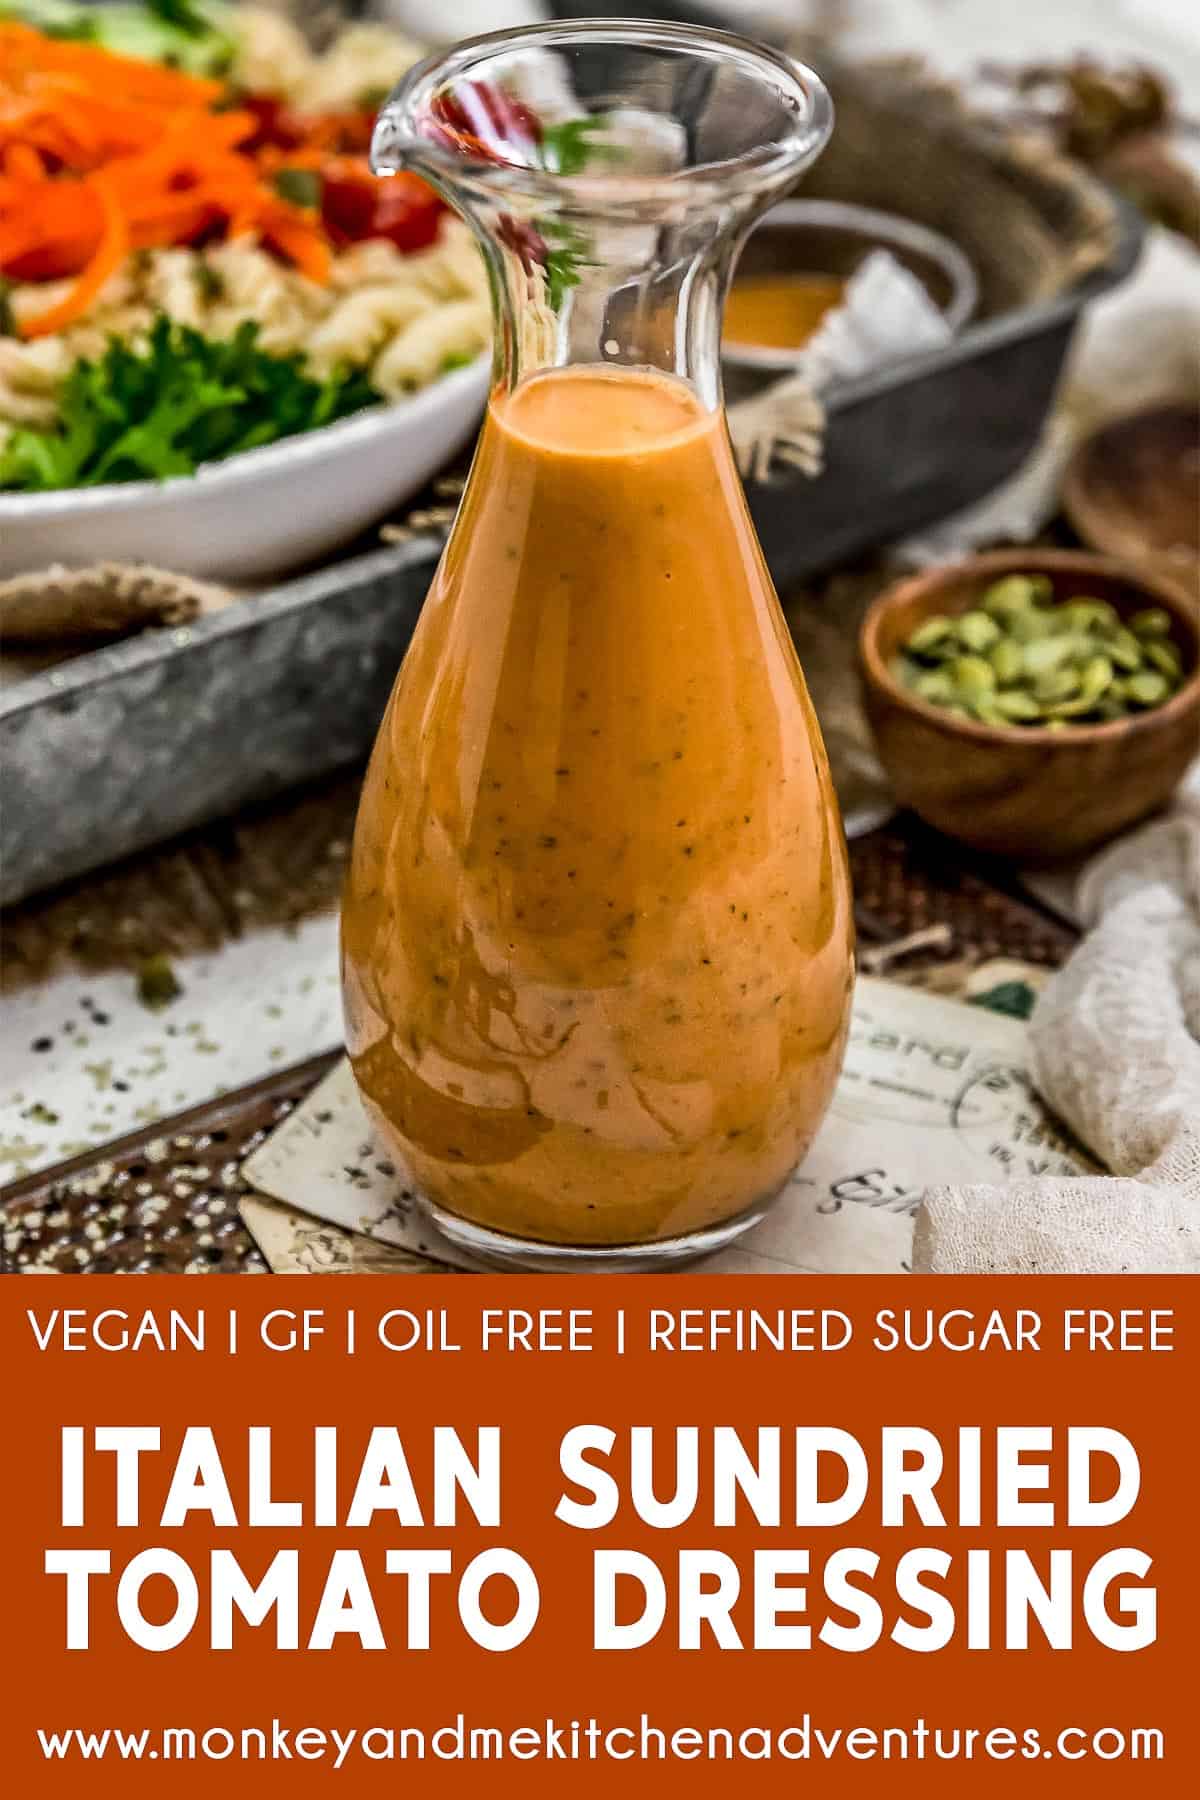 Italian Sundried Tomato Dressing with text description